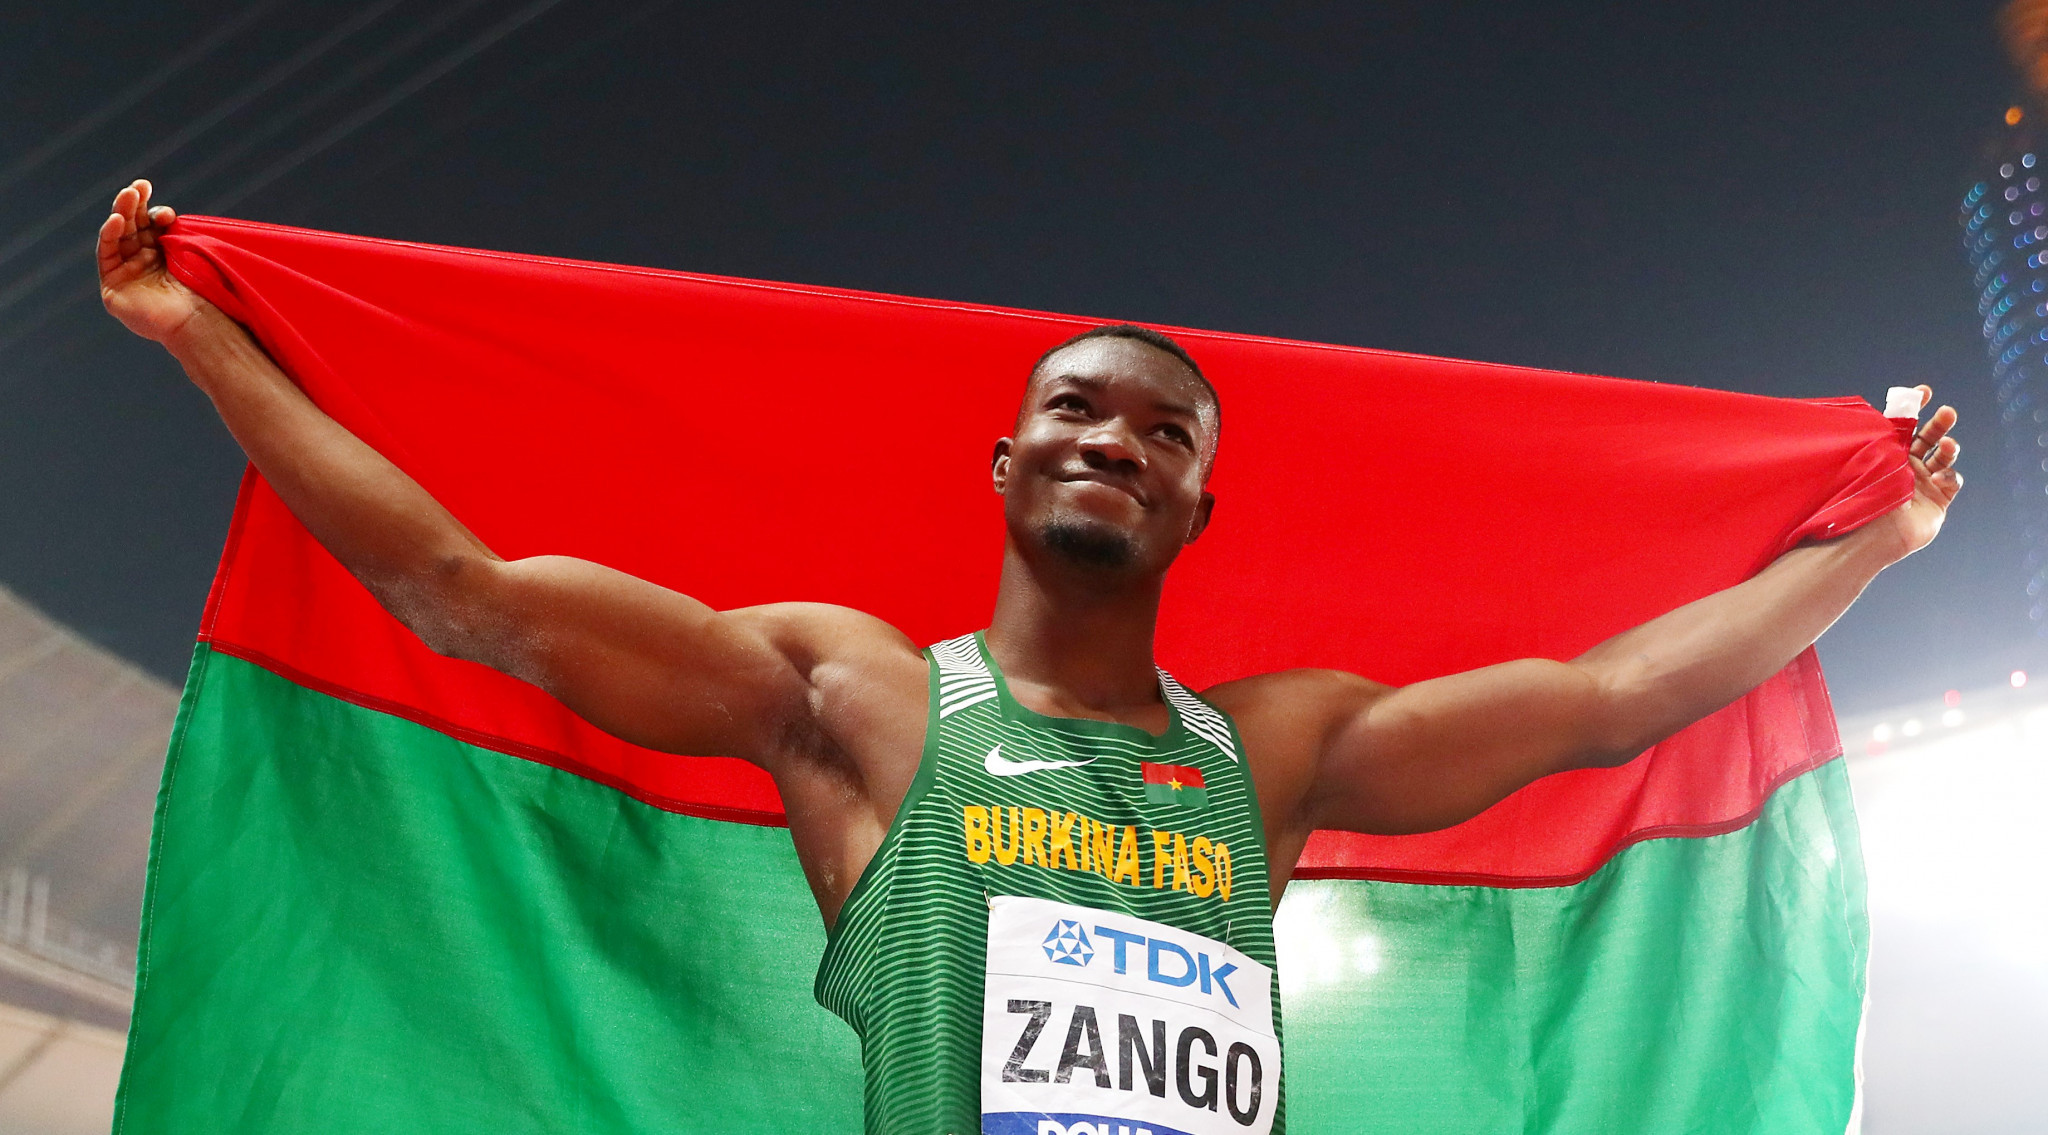 Burkina Faso's Zango sets new indoor triple jump world record